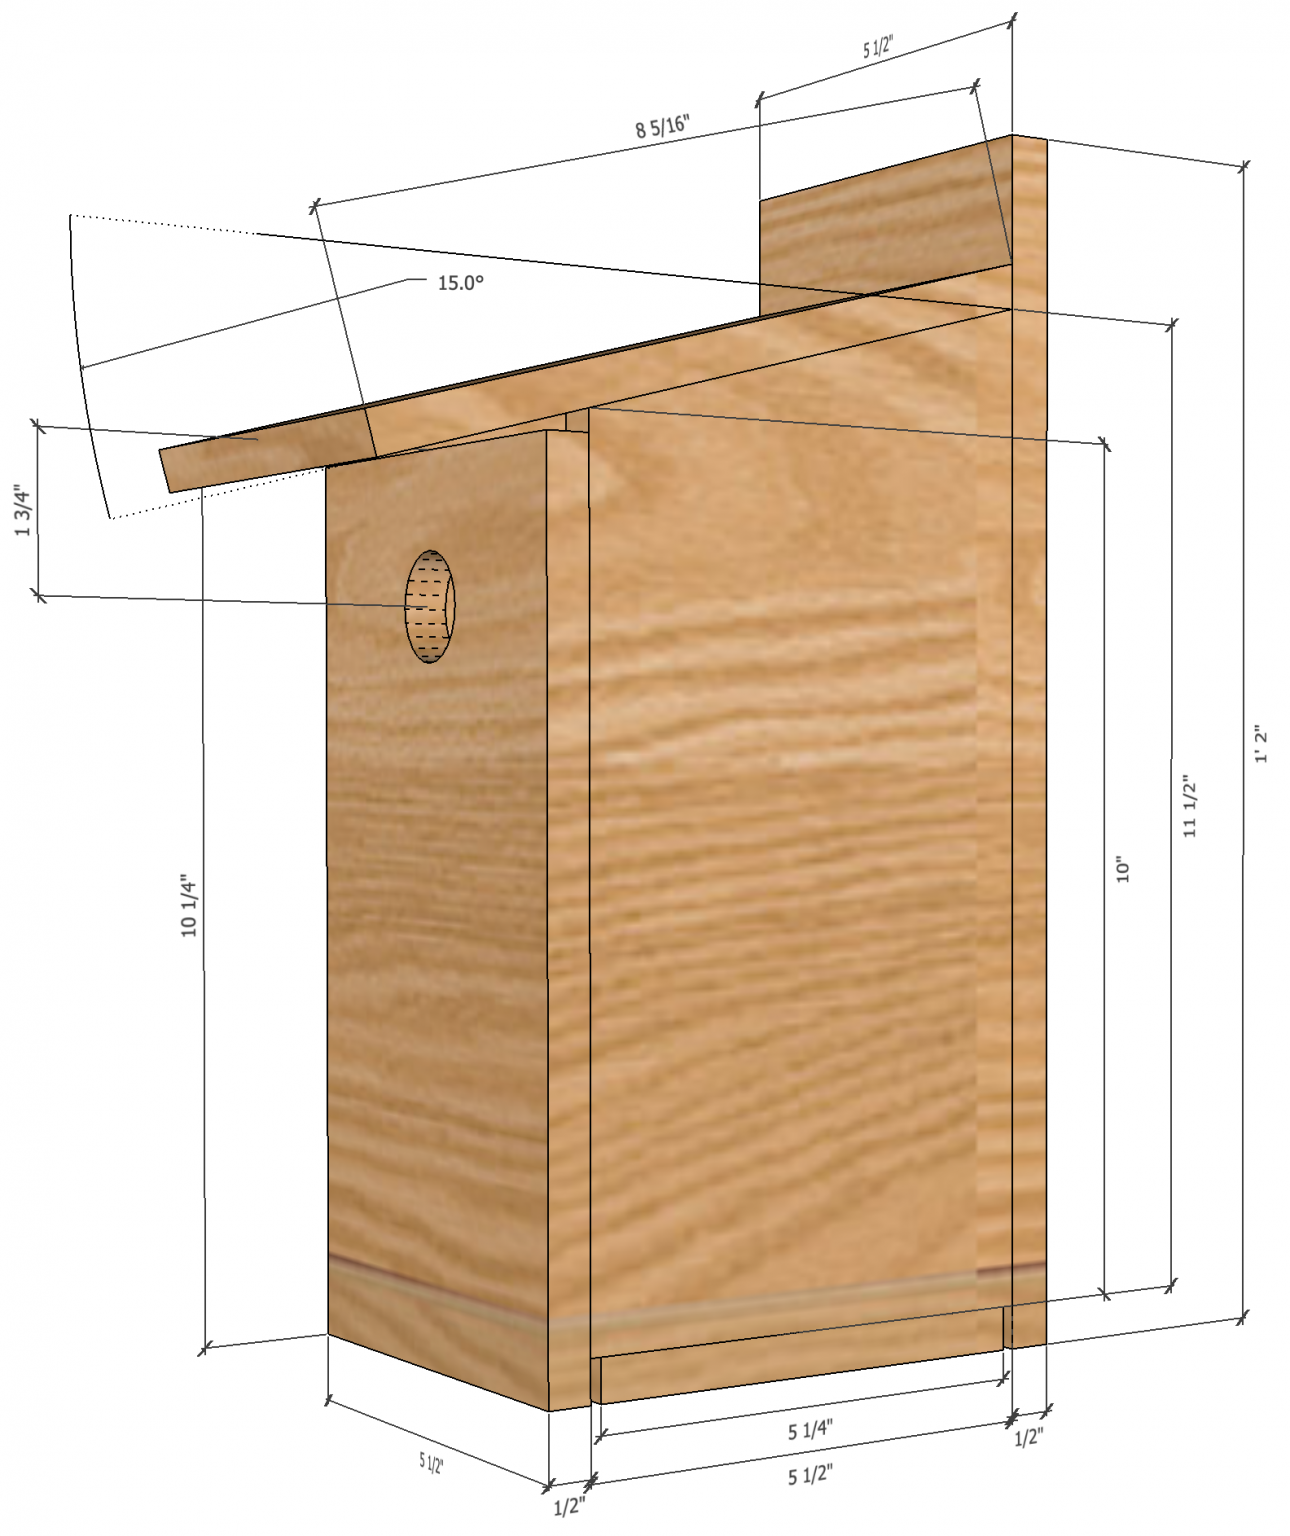 Wood birdhouse design plans